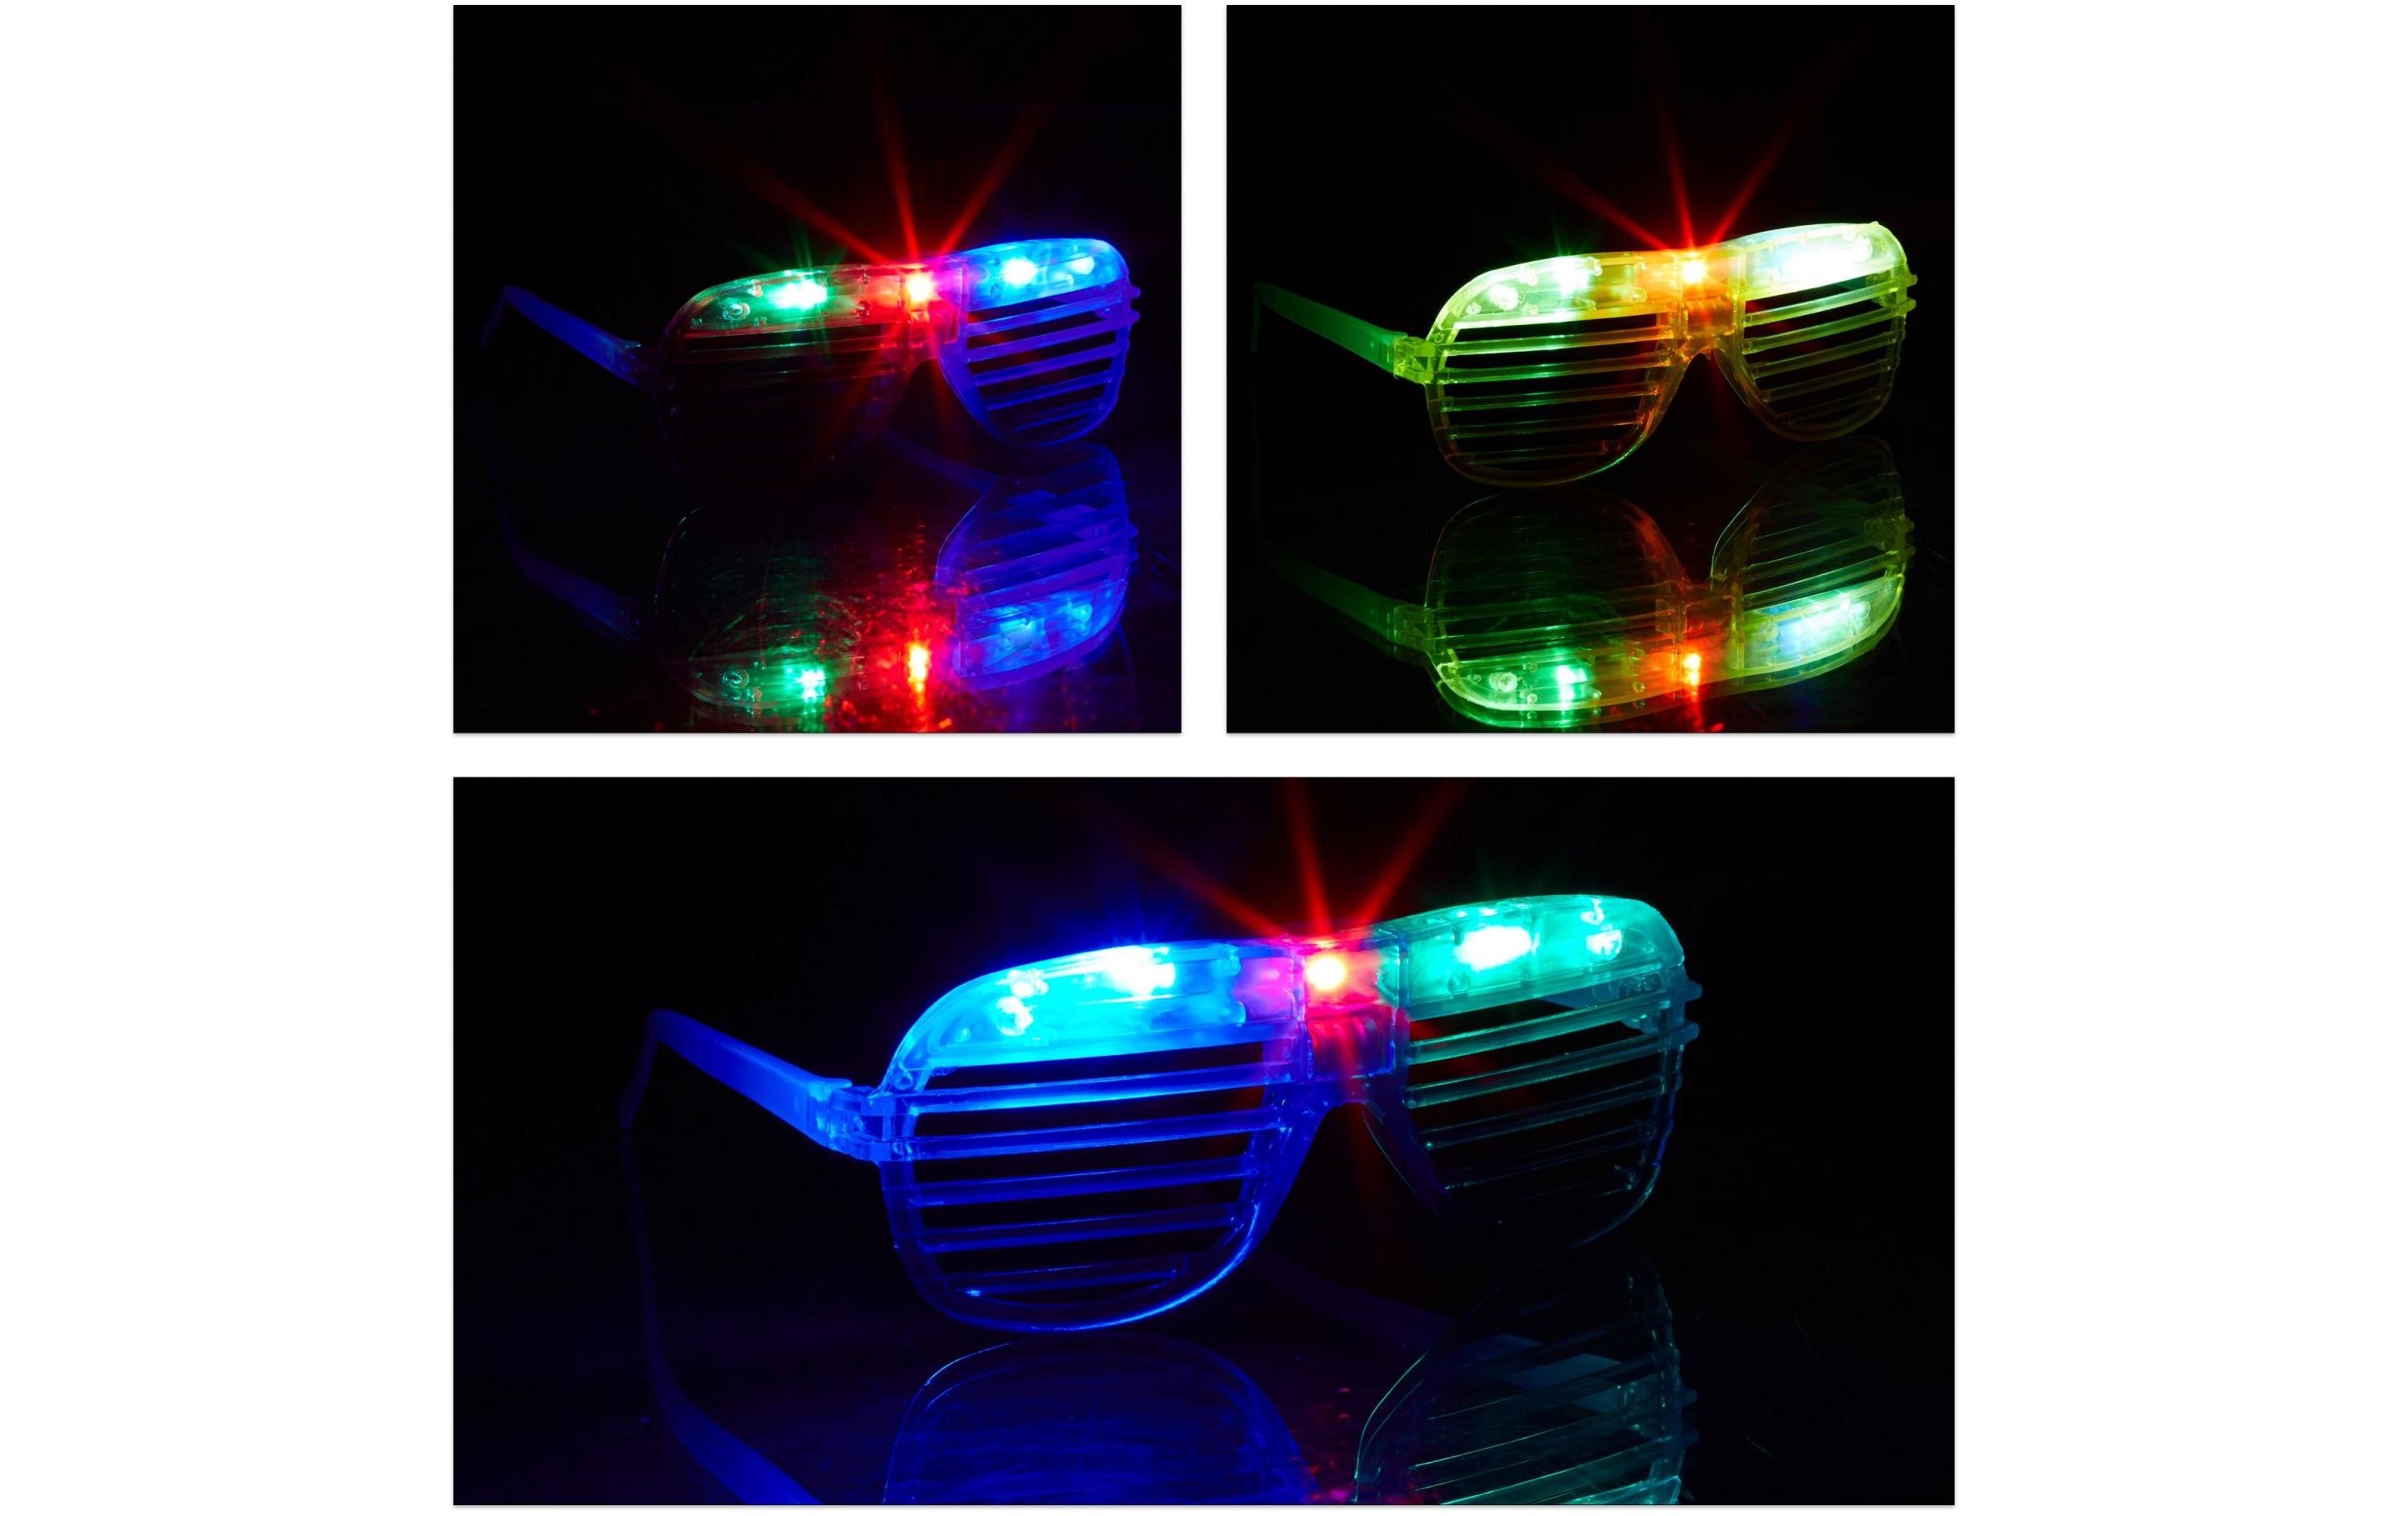 relaxdays Partybrille LED sortiert 1 Stück, 5.5 x 15 cm